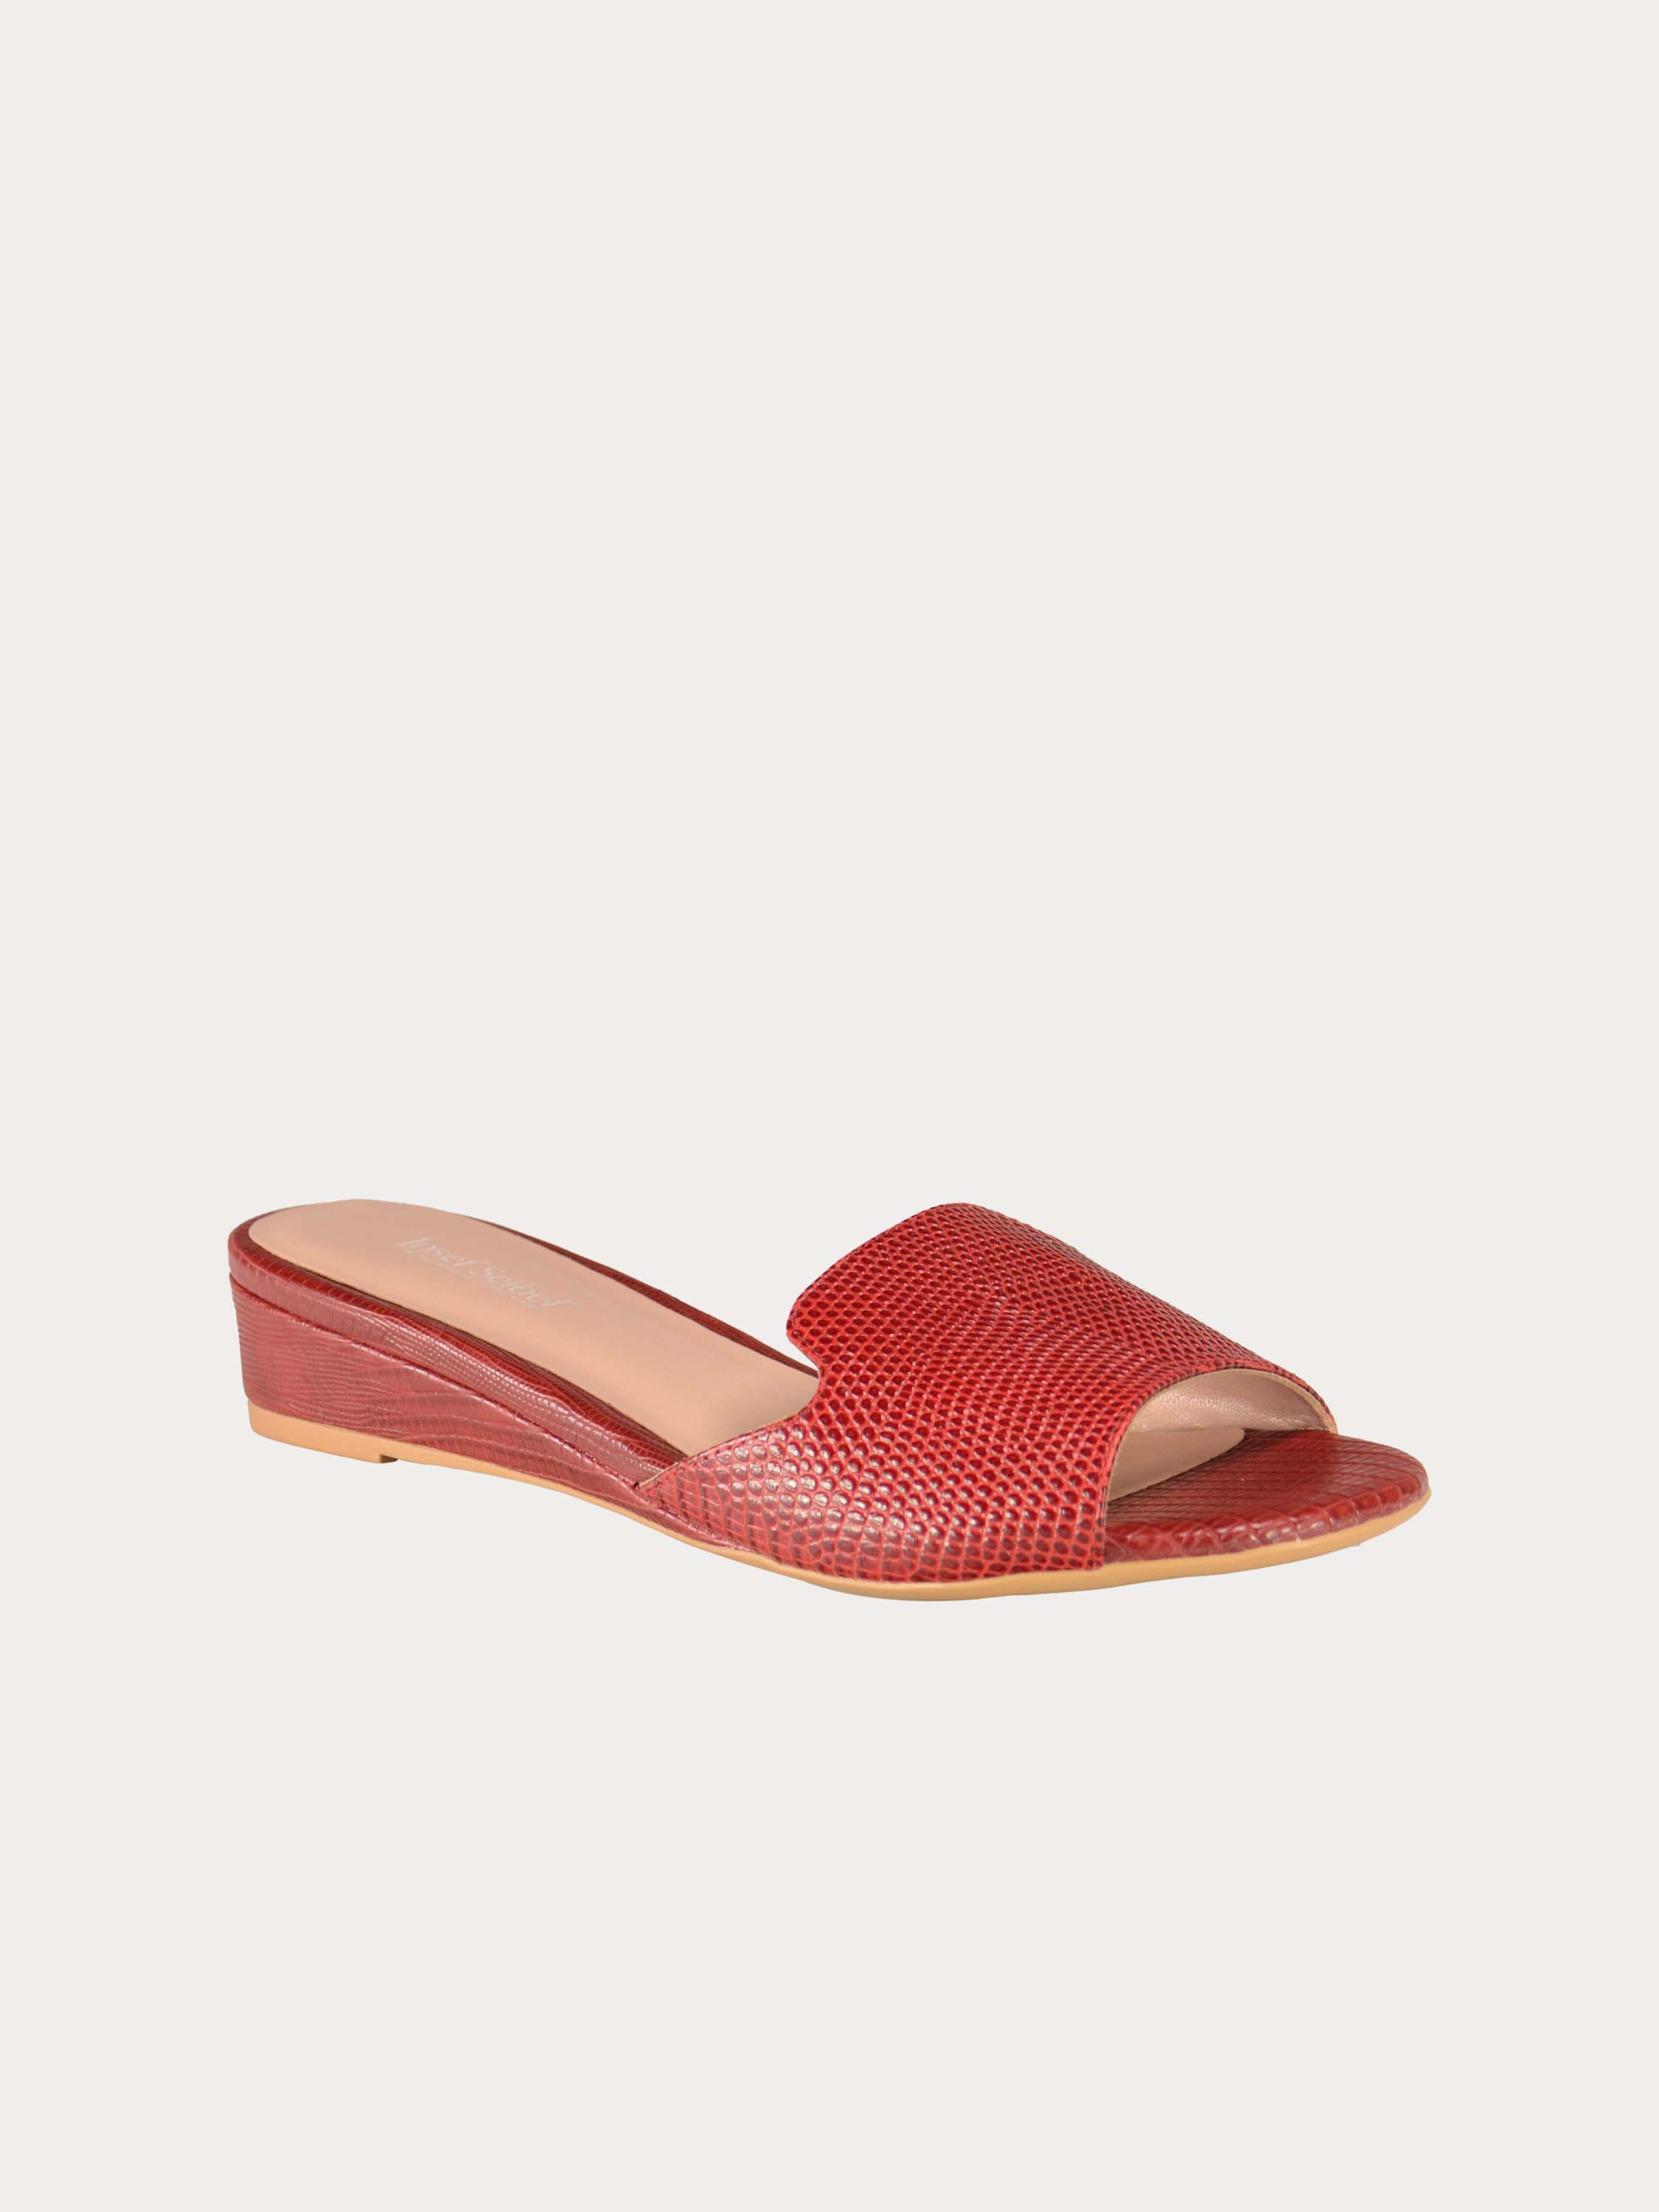 Josef Seibel Women's Micro Sandals #color_Red